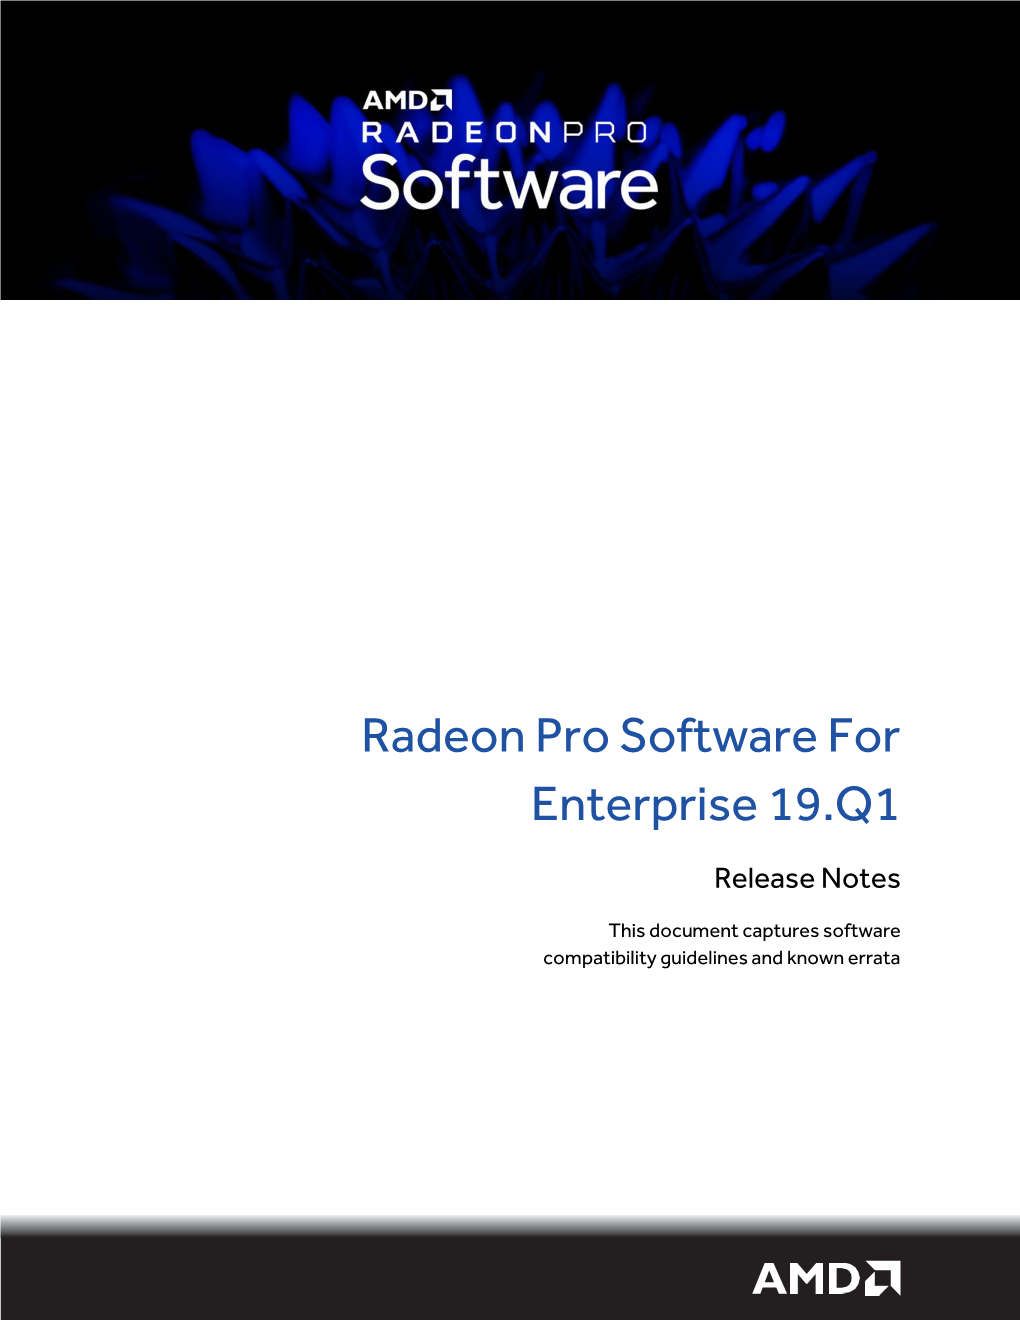 Radeon Pro Software for Enterprise 19.Q1